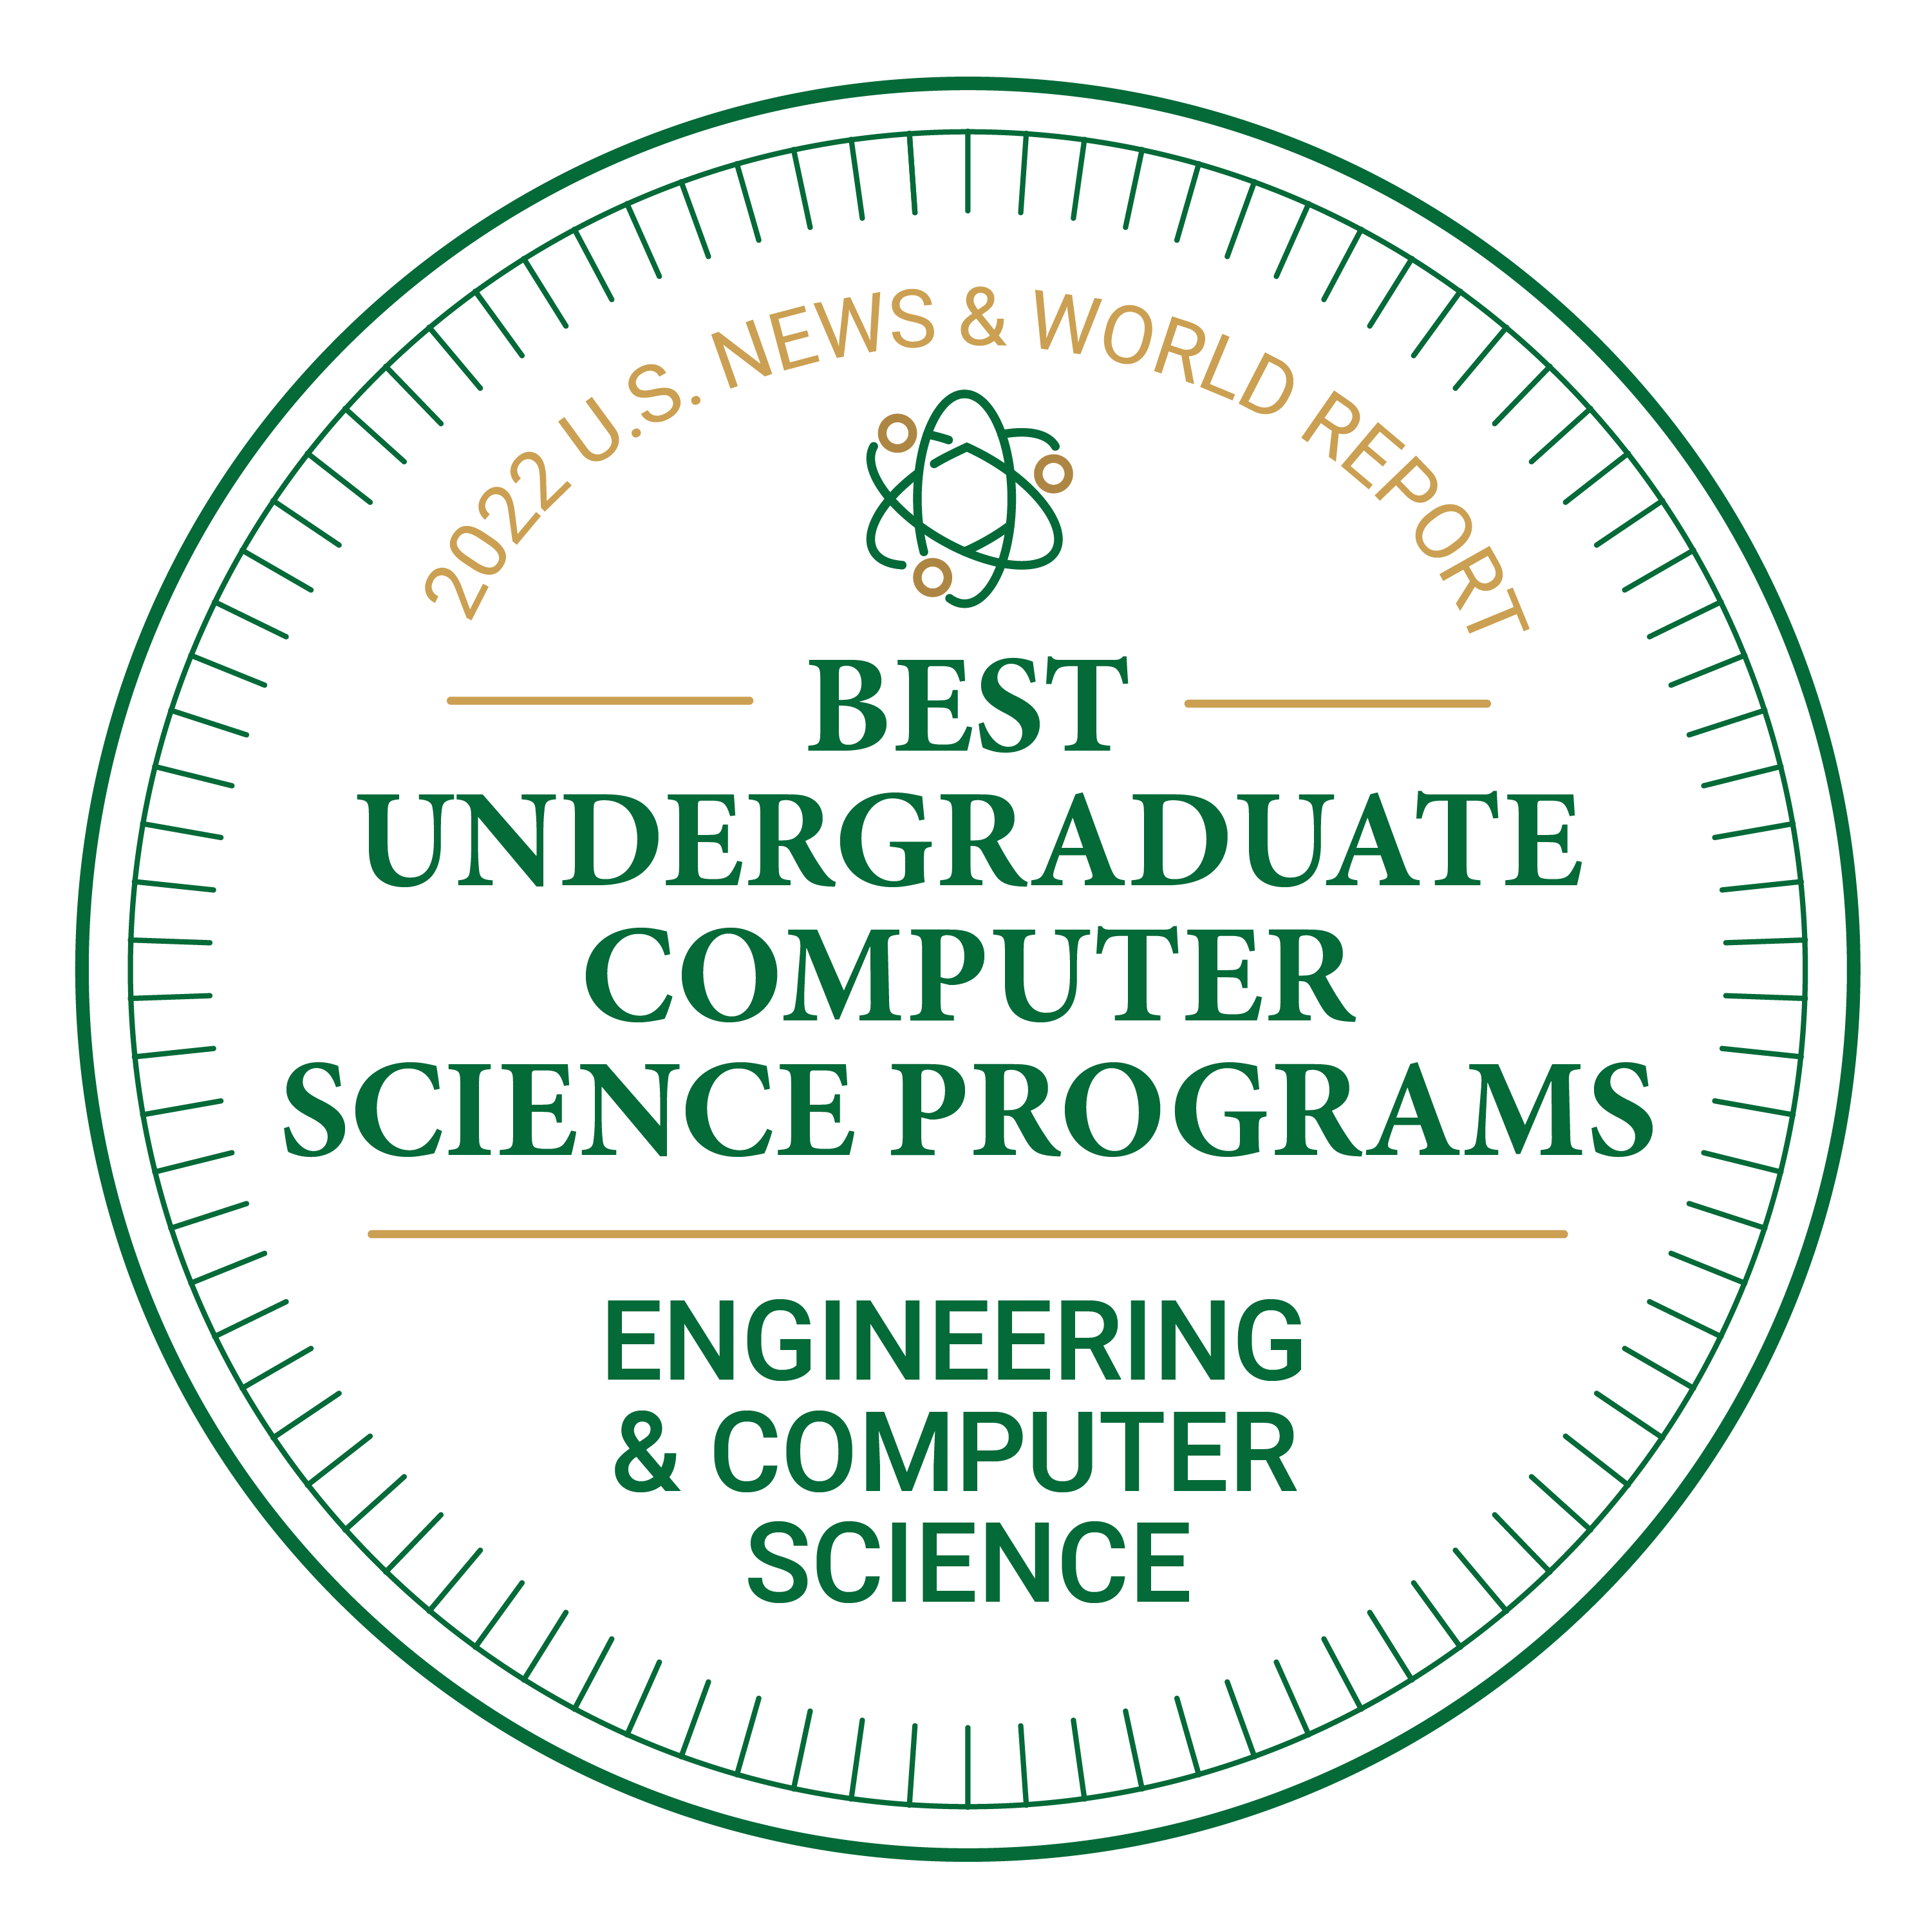 2022 U.S. News & World Report Best Undergraduate Computer Science Programs Engineering and Computer Science